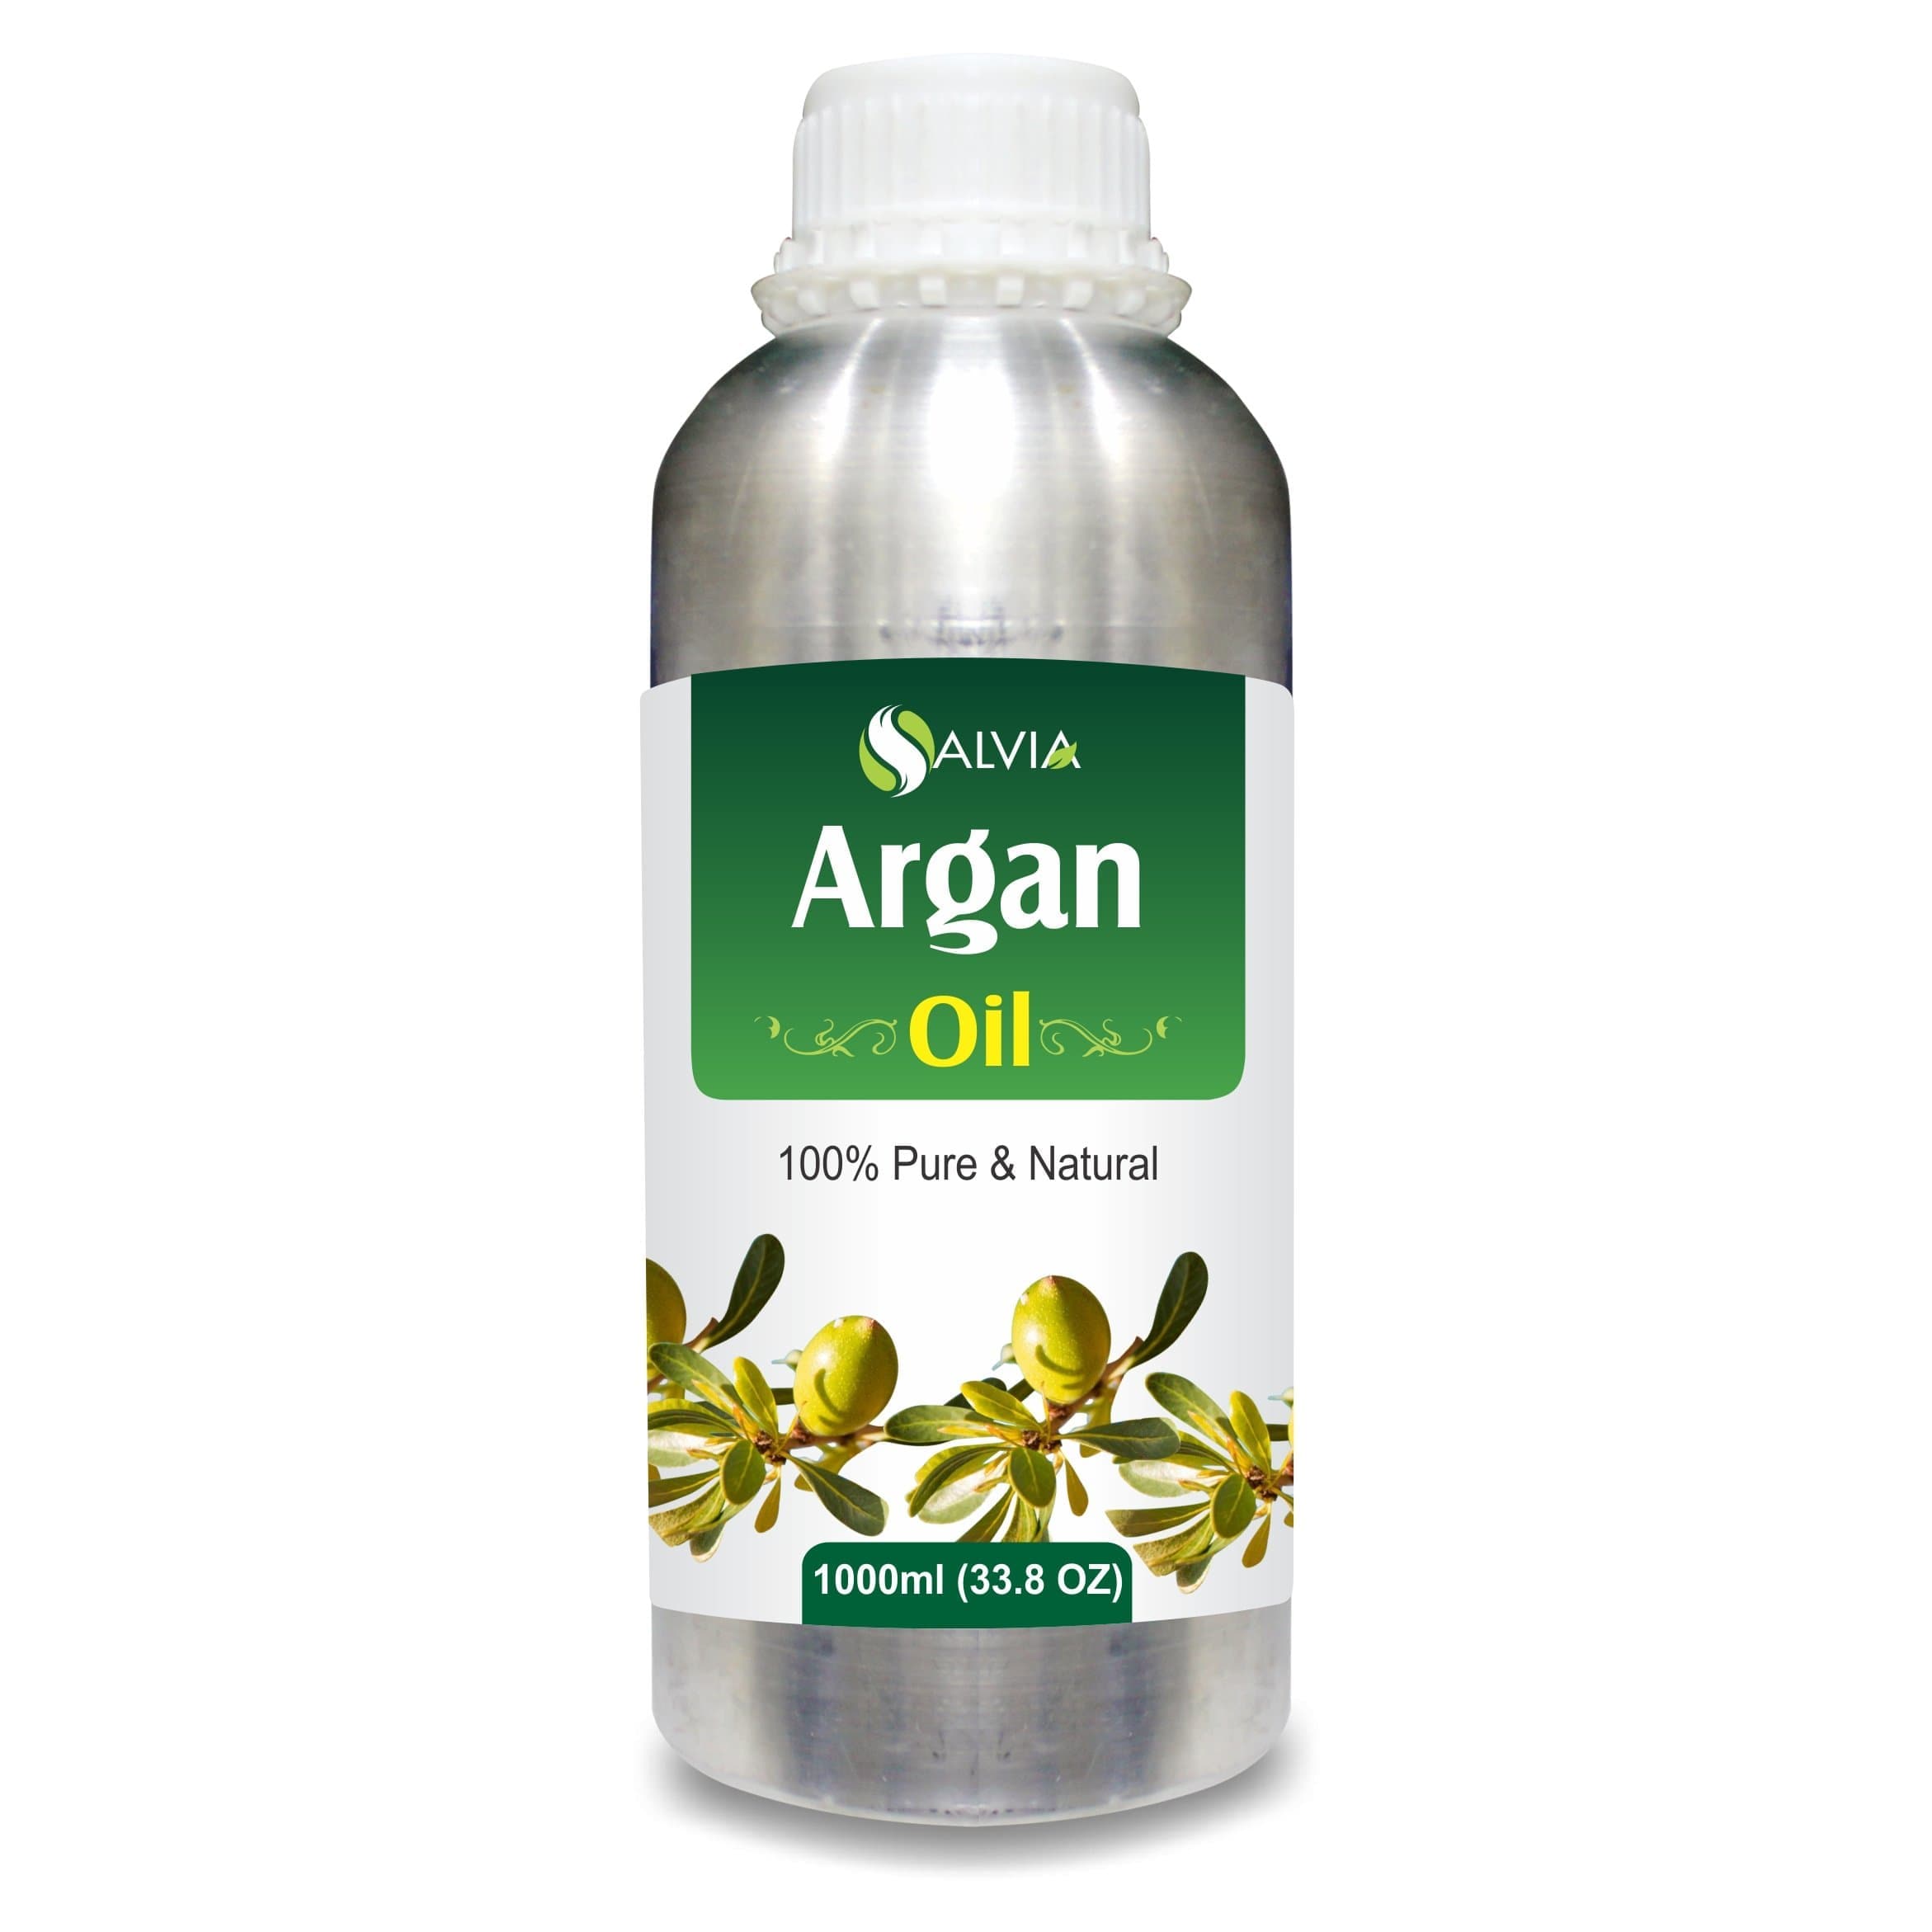 argan oil benefits for skin - Shoprythm